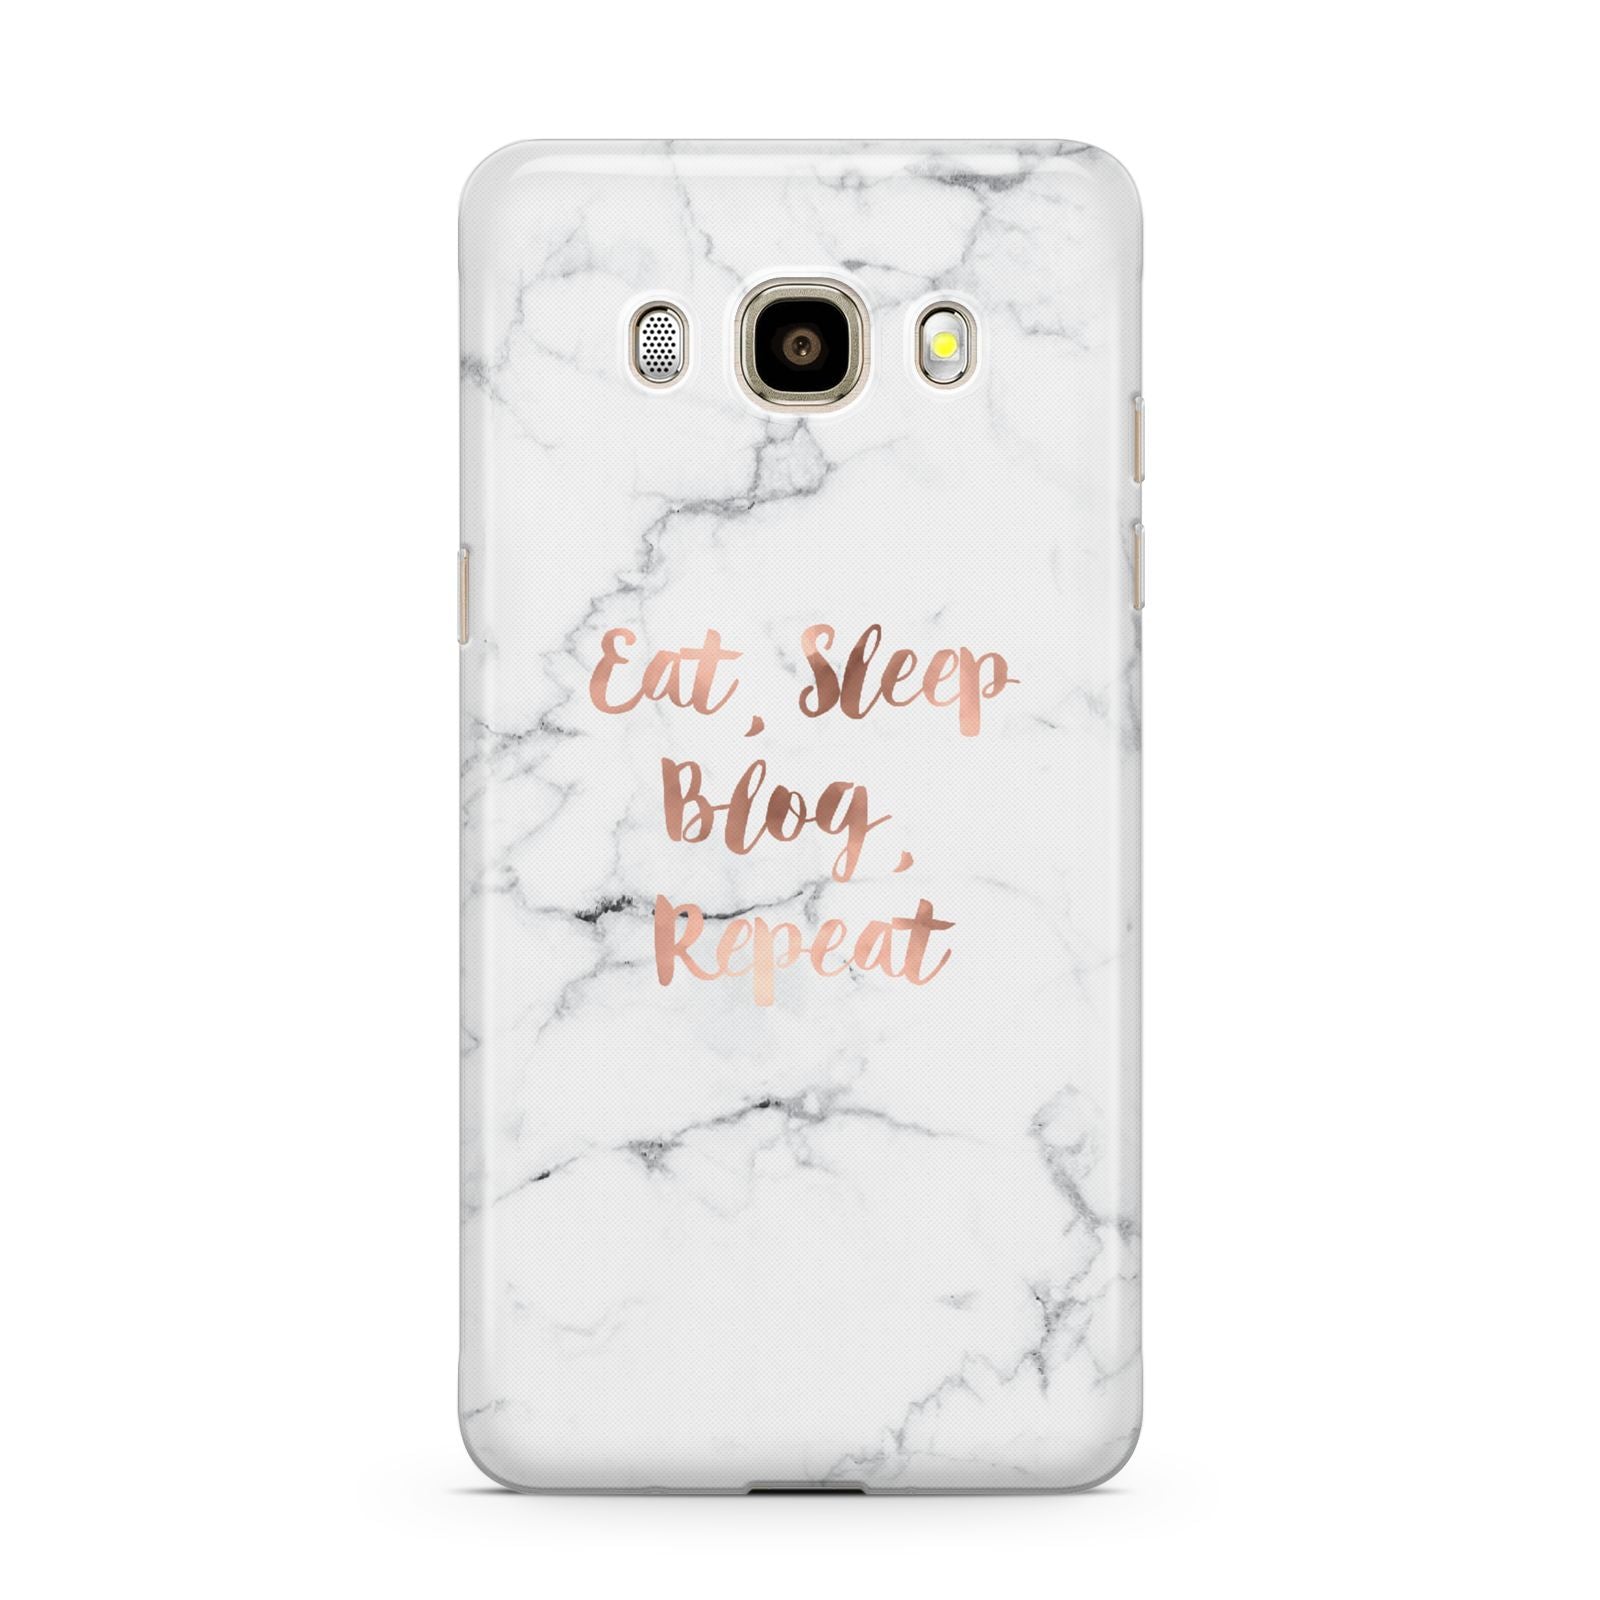 Eat Sleep Blog Repeat Marble Effect Samsung Galaxy J7 2016 Case on gold phone